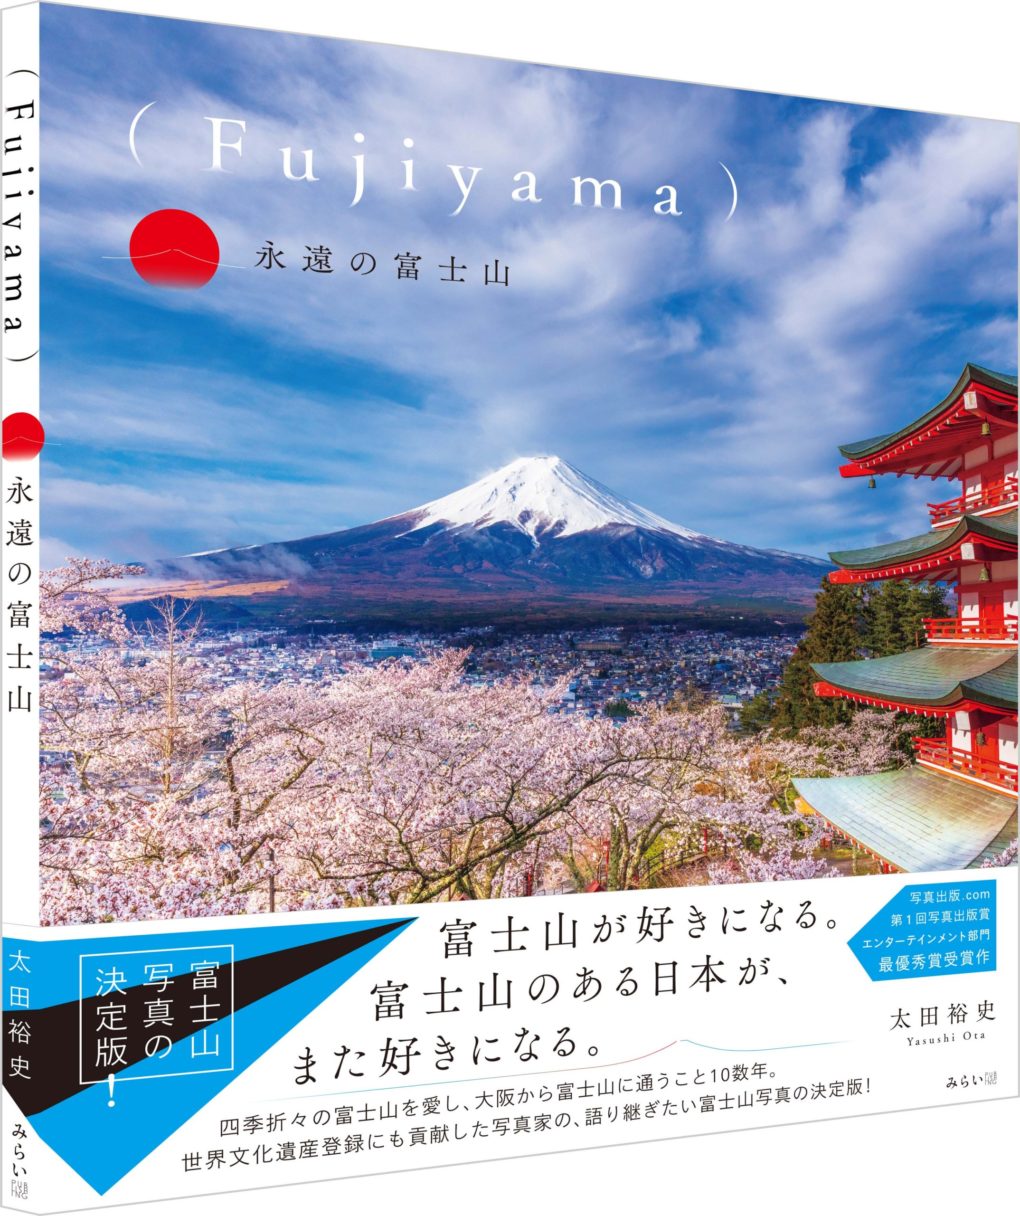 Fujiyama 永遠の富士山 みらいパブリッシング